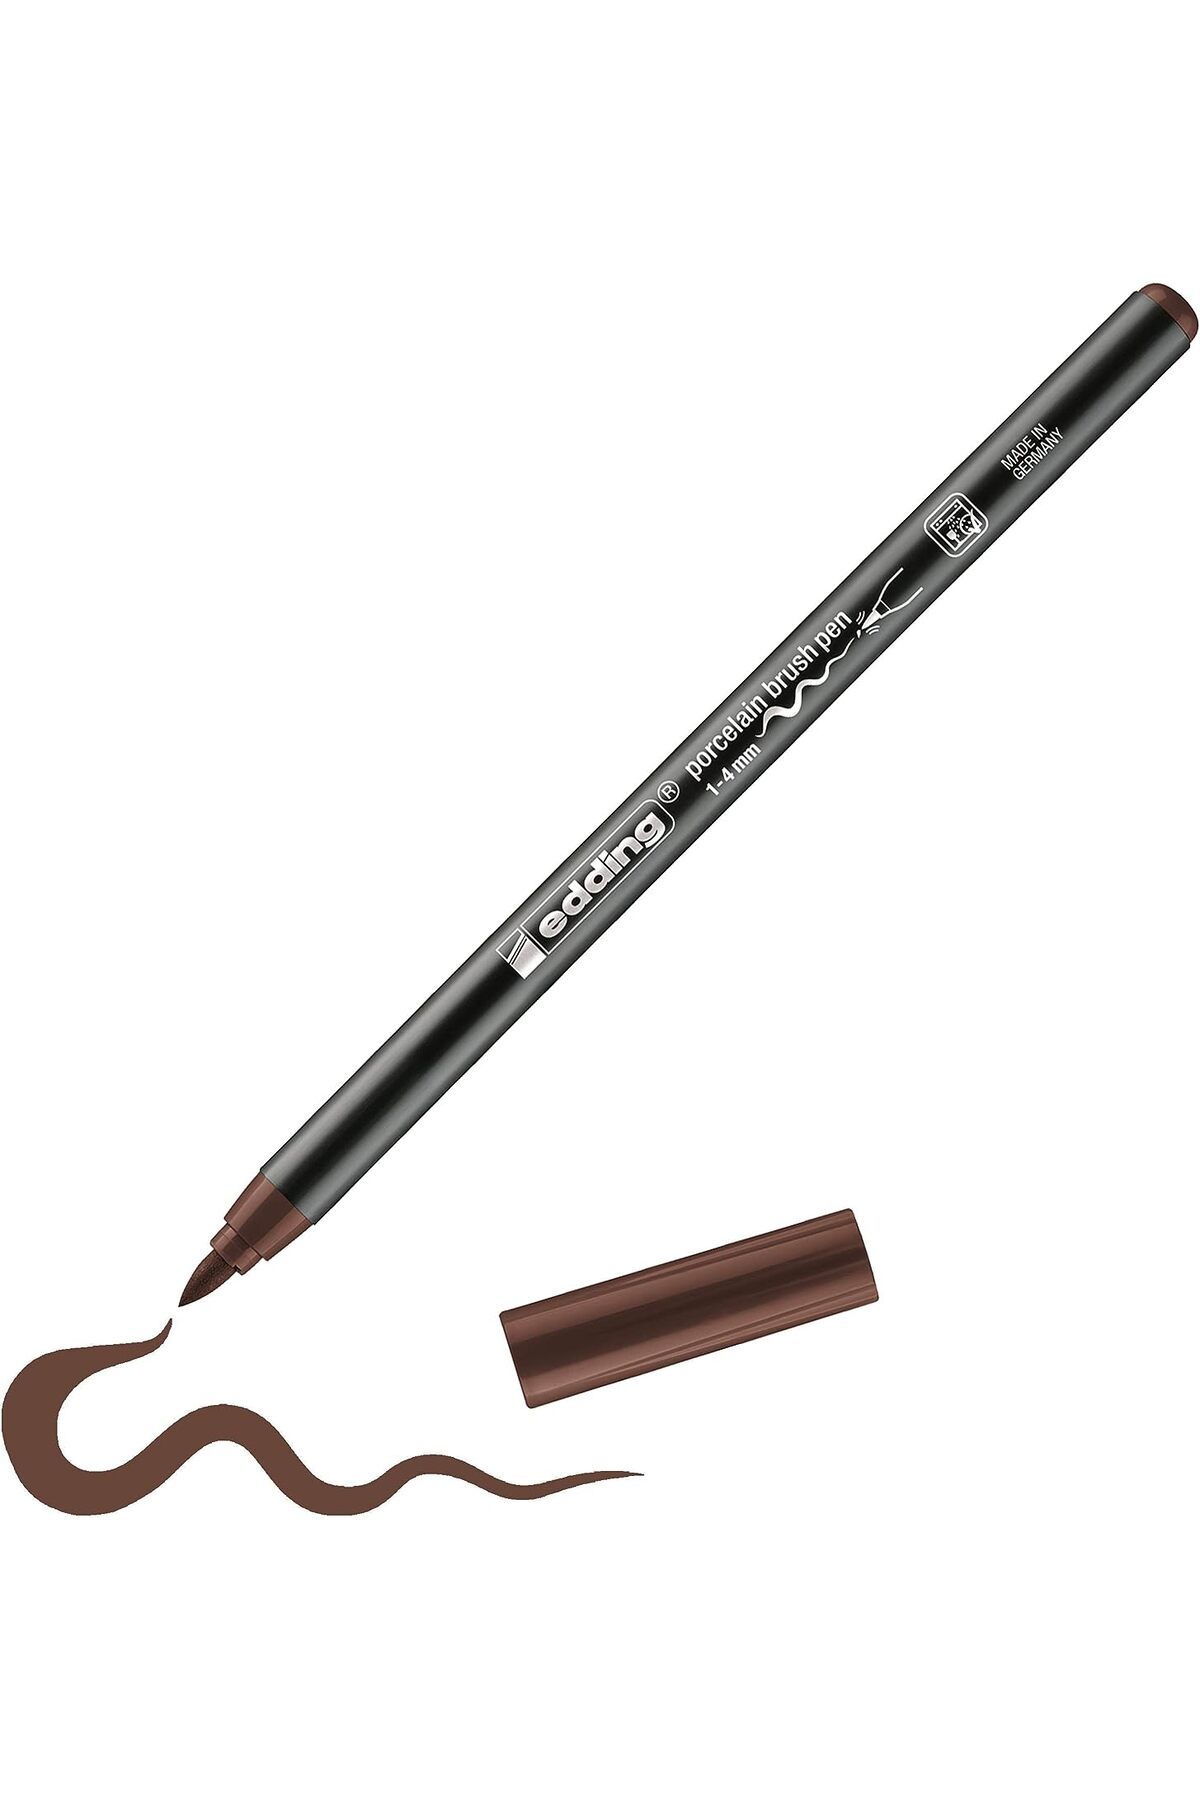 Edding 4200 Fırça Uçlu Porselen Kalemi 1-4mm – Kahverengi